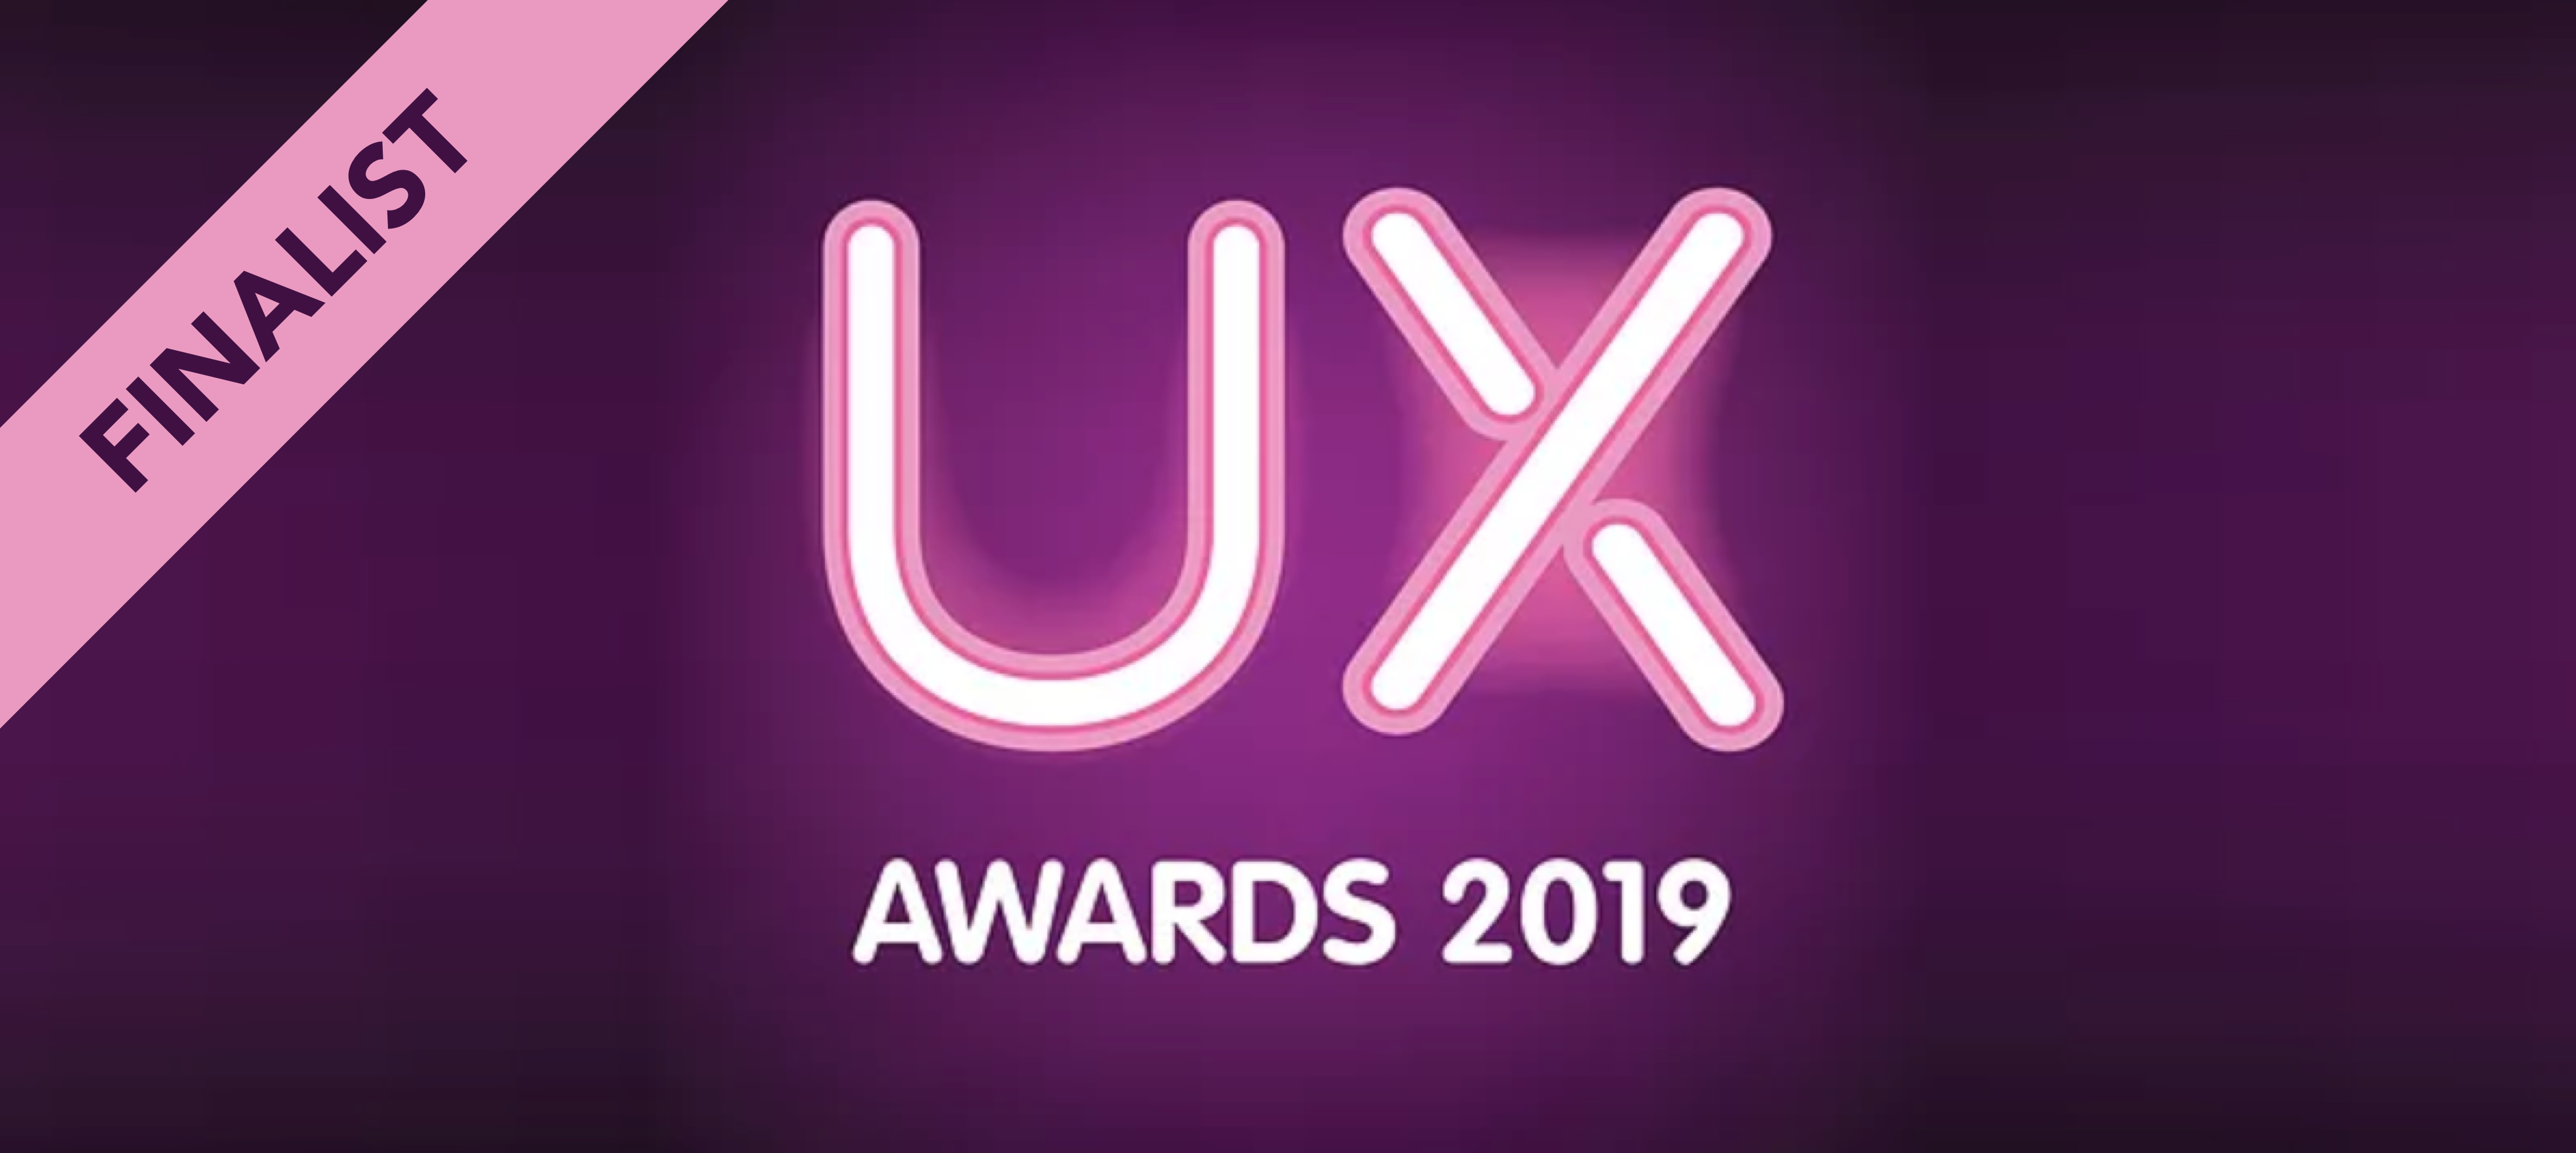 UX Awards 2019 finalist